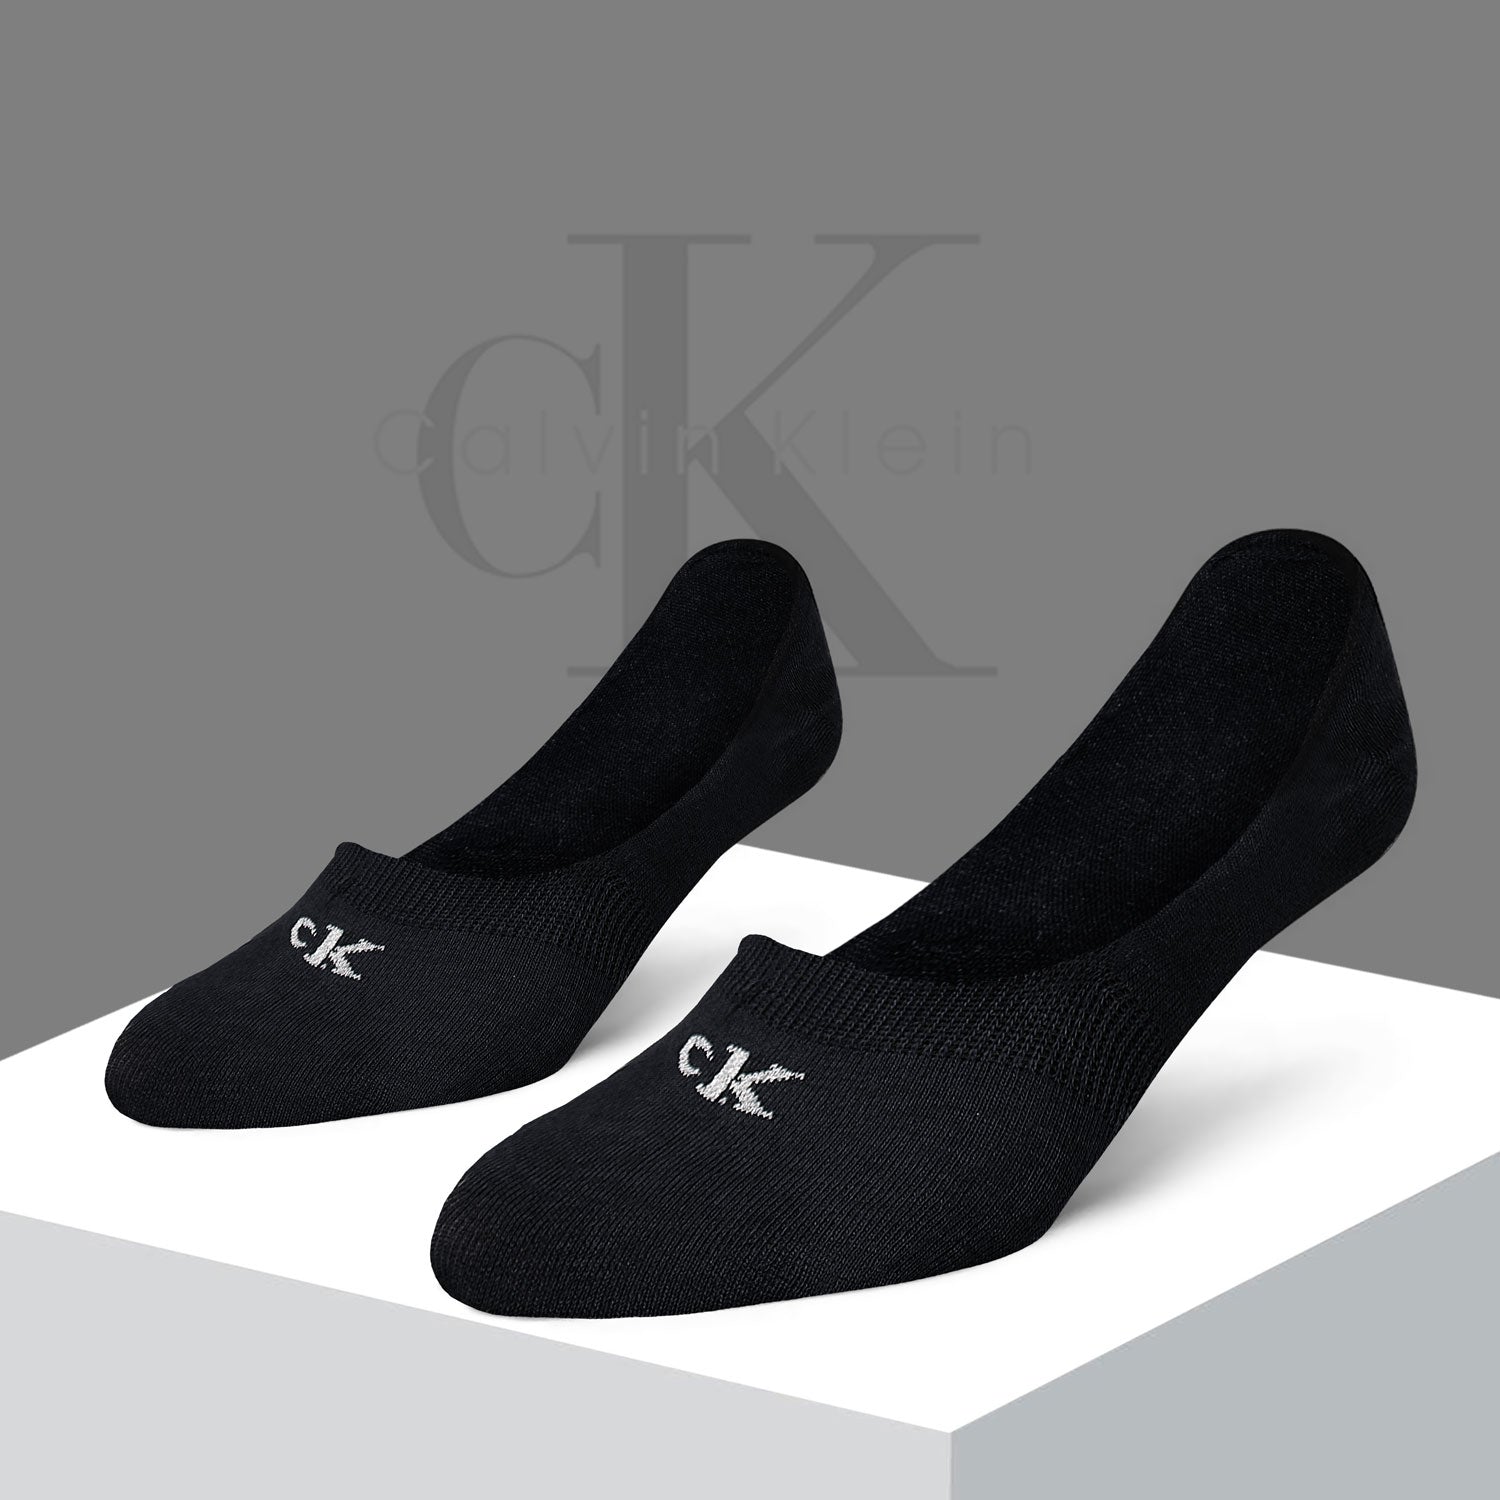 Ck-Men Black No-Show Socks (Pack of 1) – The Original Wears